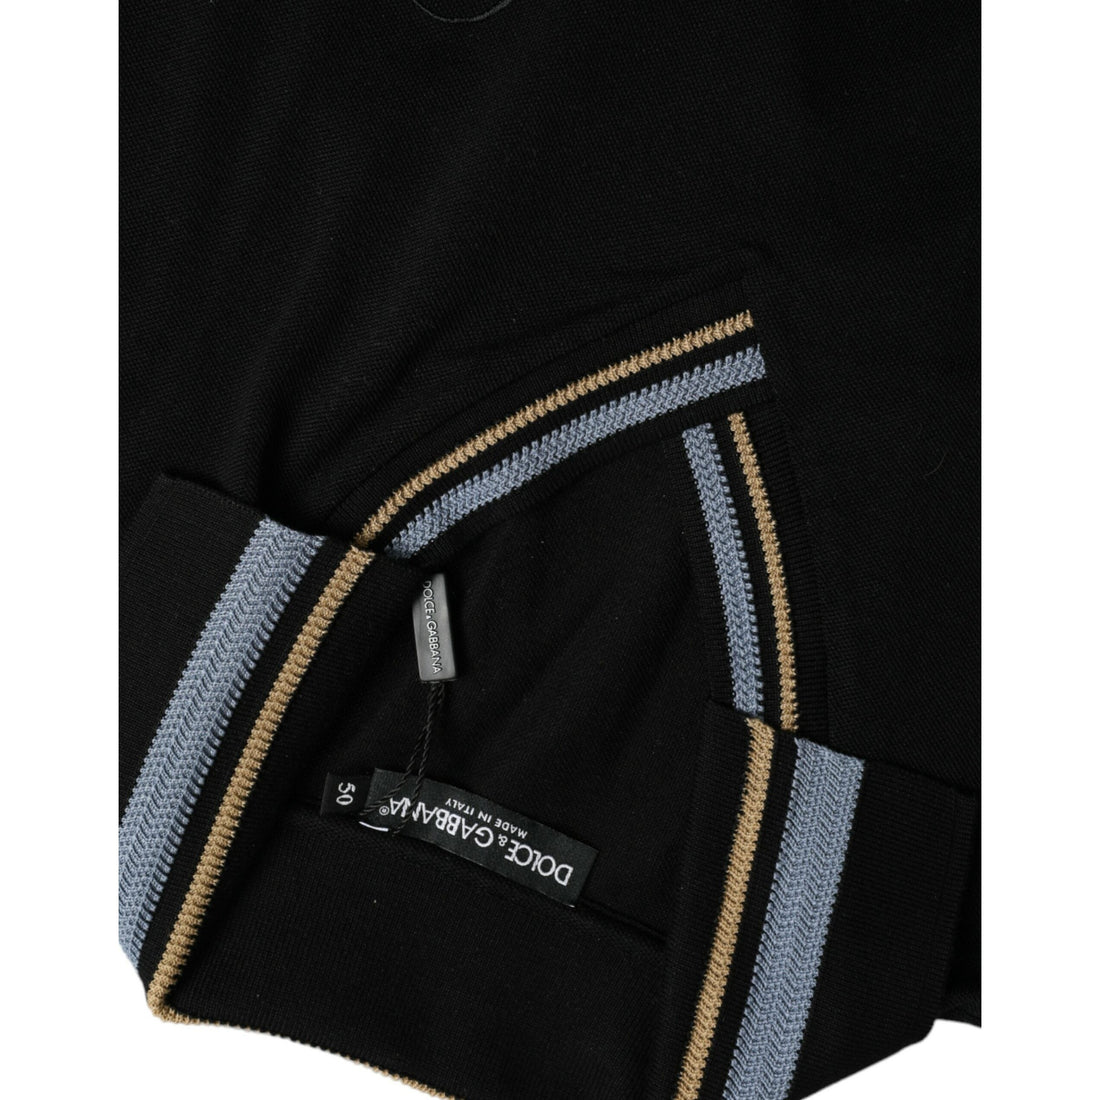 Dolce & Gabbana Black Cotton Collared V-neck Polo T-shirt